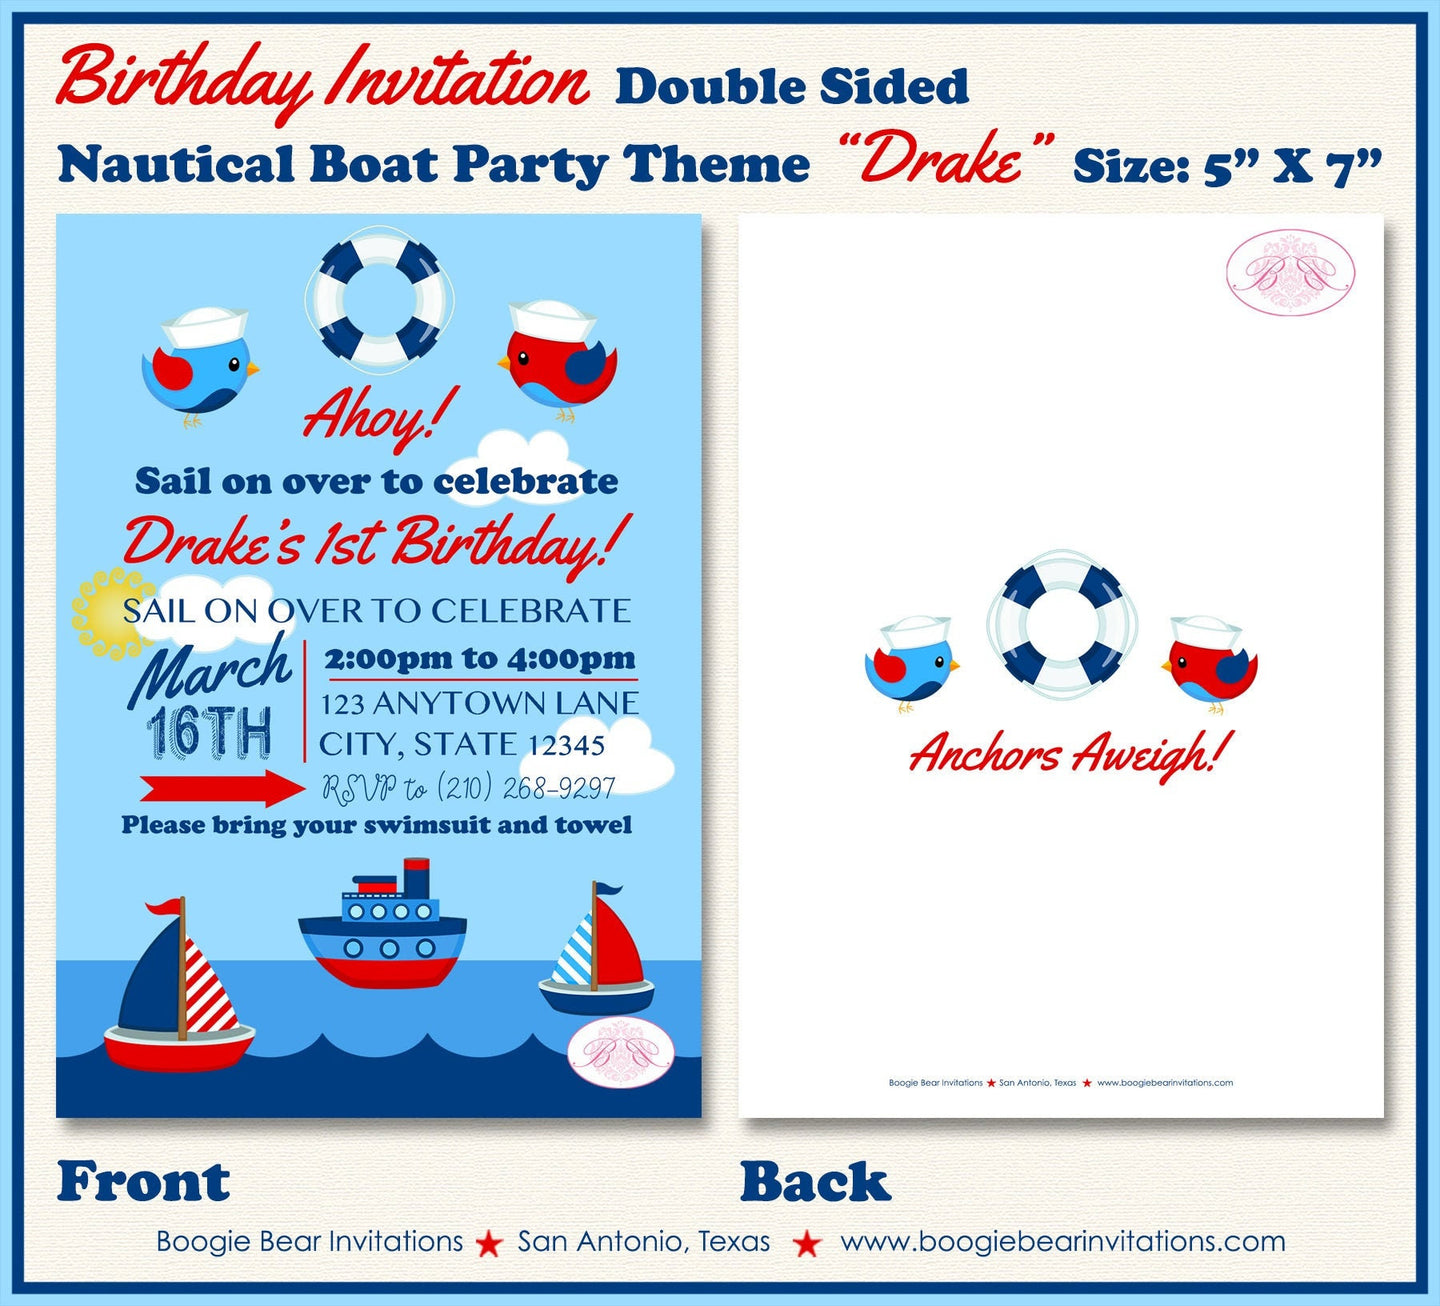 Nautical Sailor Birthday Party Invitation Boat Boy Girl Red Blue Ocean Sail Boogie Bear Invitations Drake Theme Paperless Printable Printed